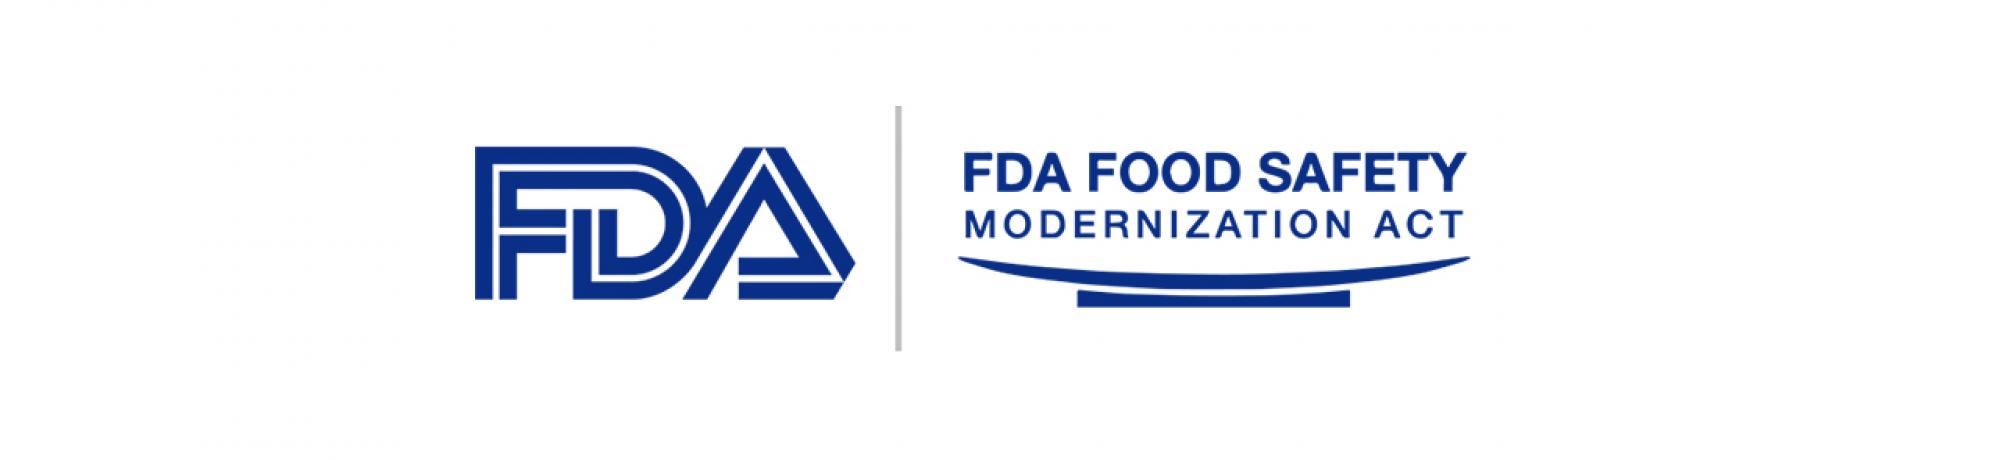 FSMA logo resized